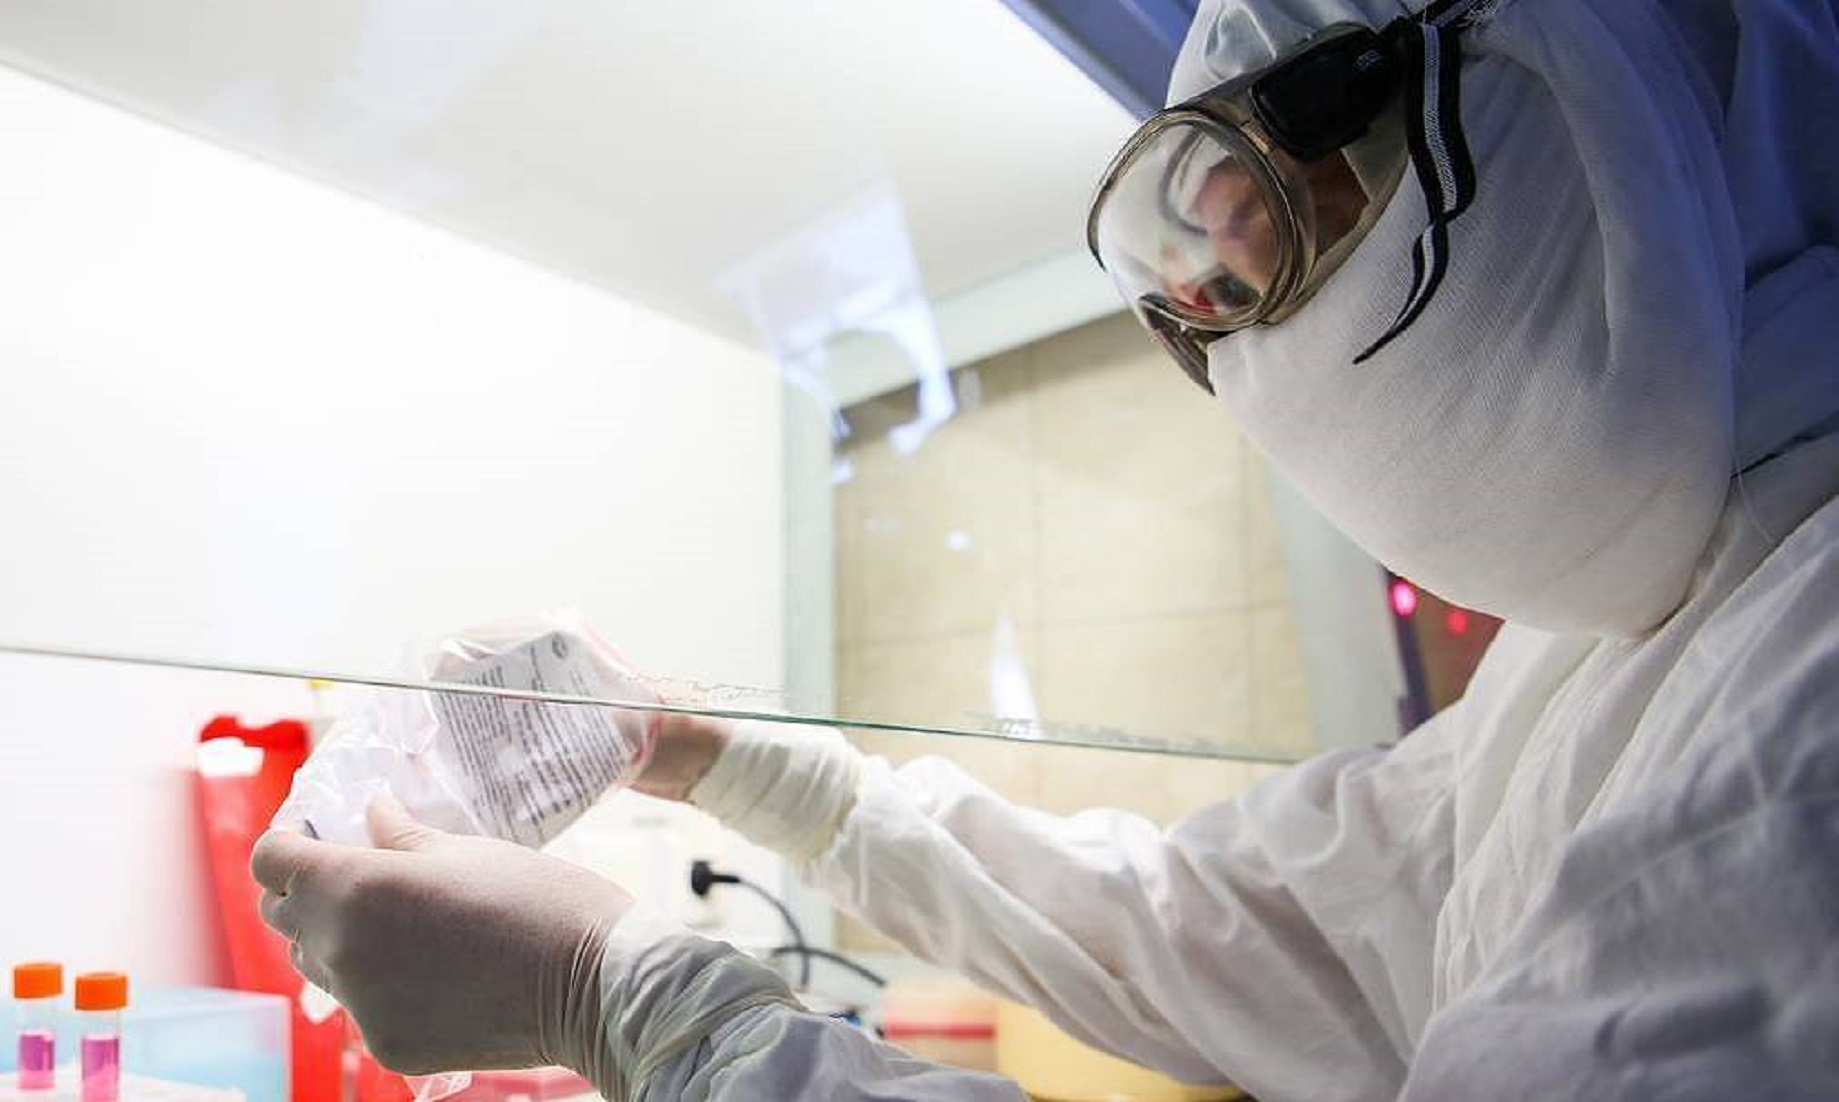 Russia starts testing vaccine against COVID-19